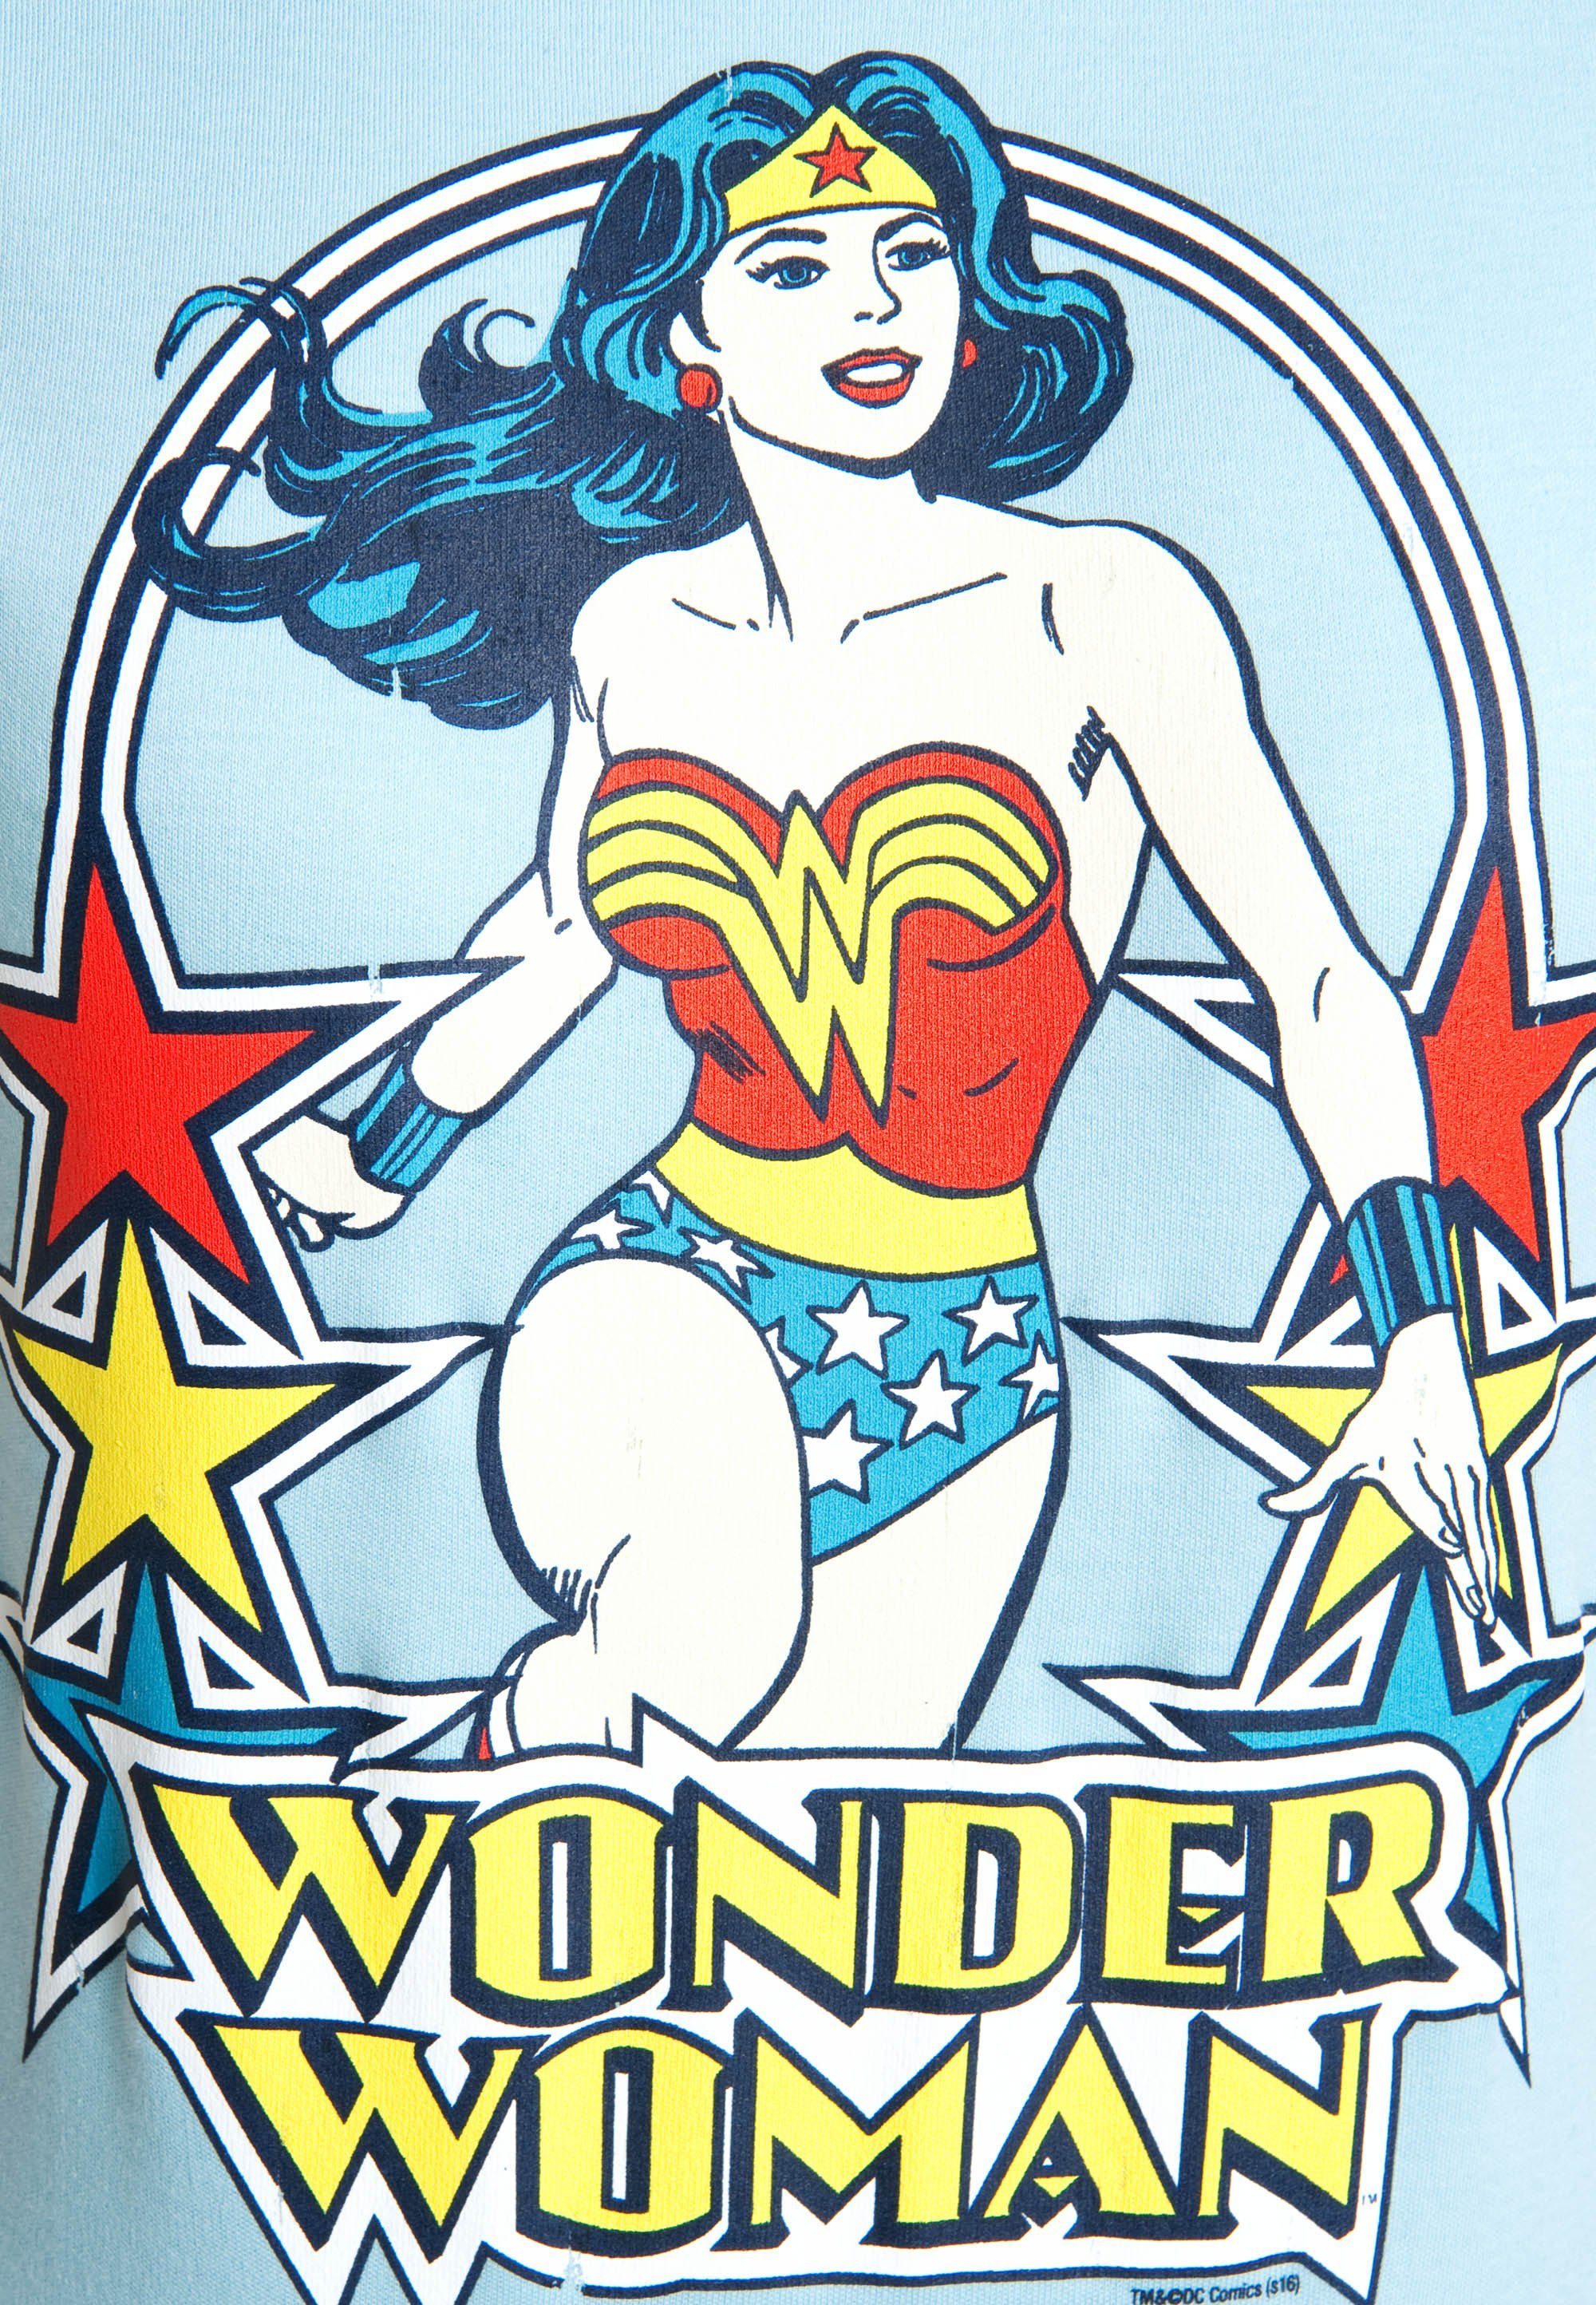 LOGOSHIRT T-Shirt Stars – Wonder Woman lizenziertem hellblau mit Originaldesign